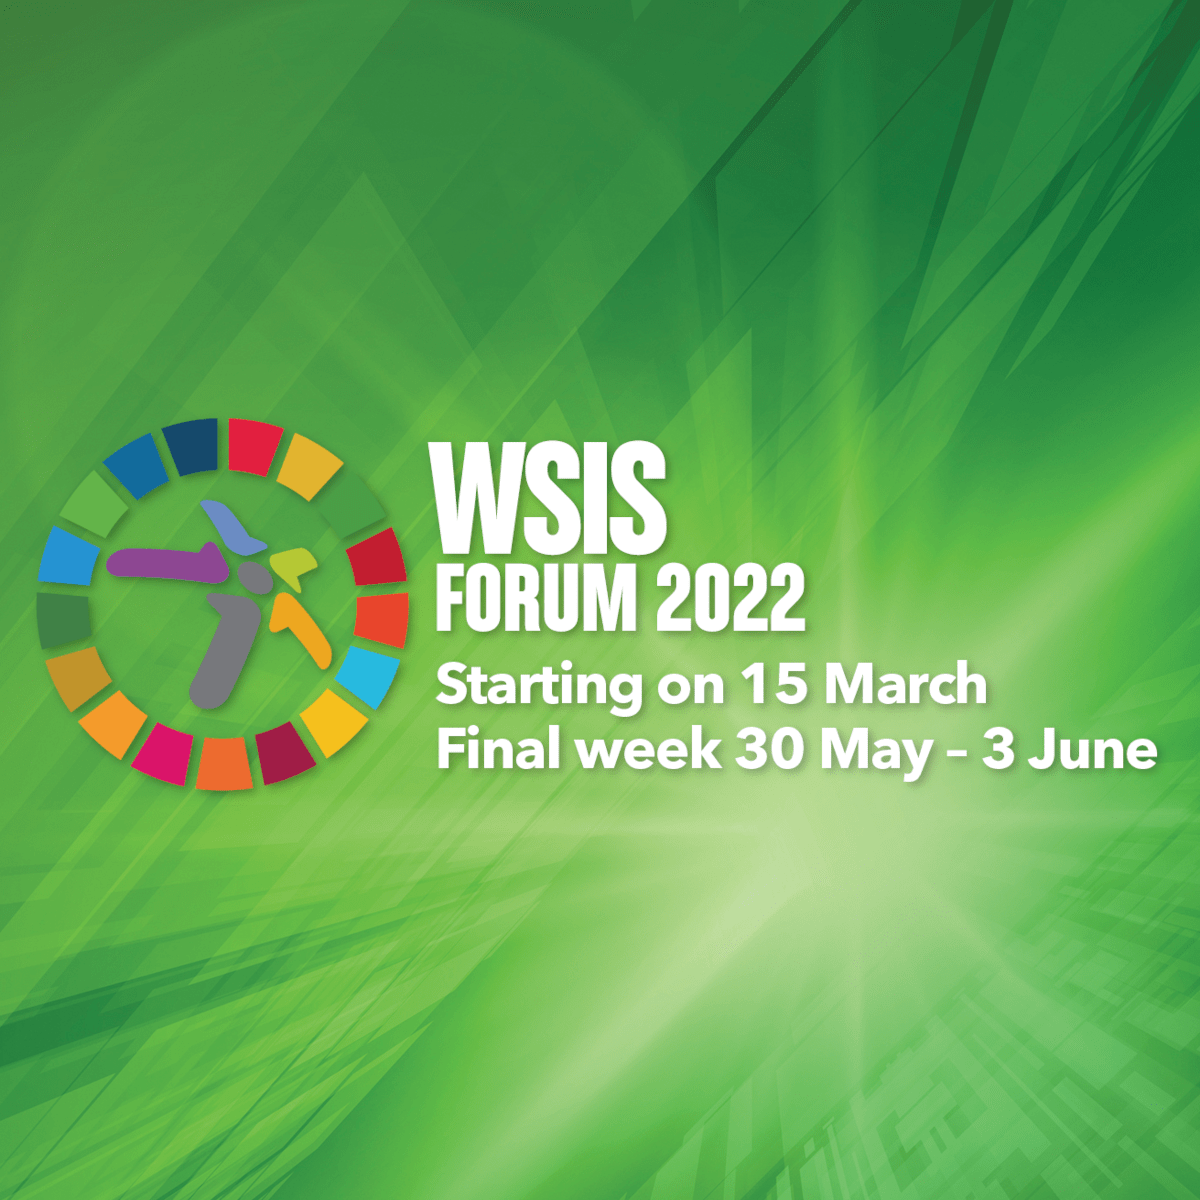 World Summit on the Information Society Forum 2022 | WSIS Forum 2022